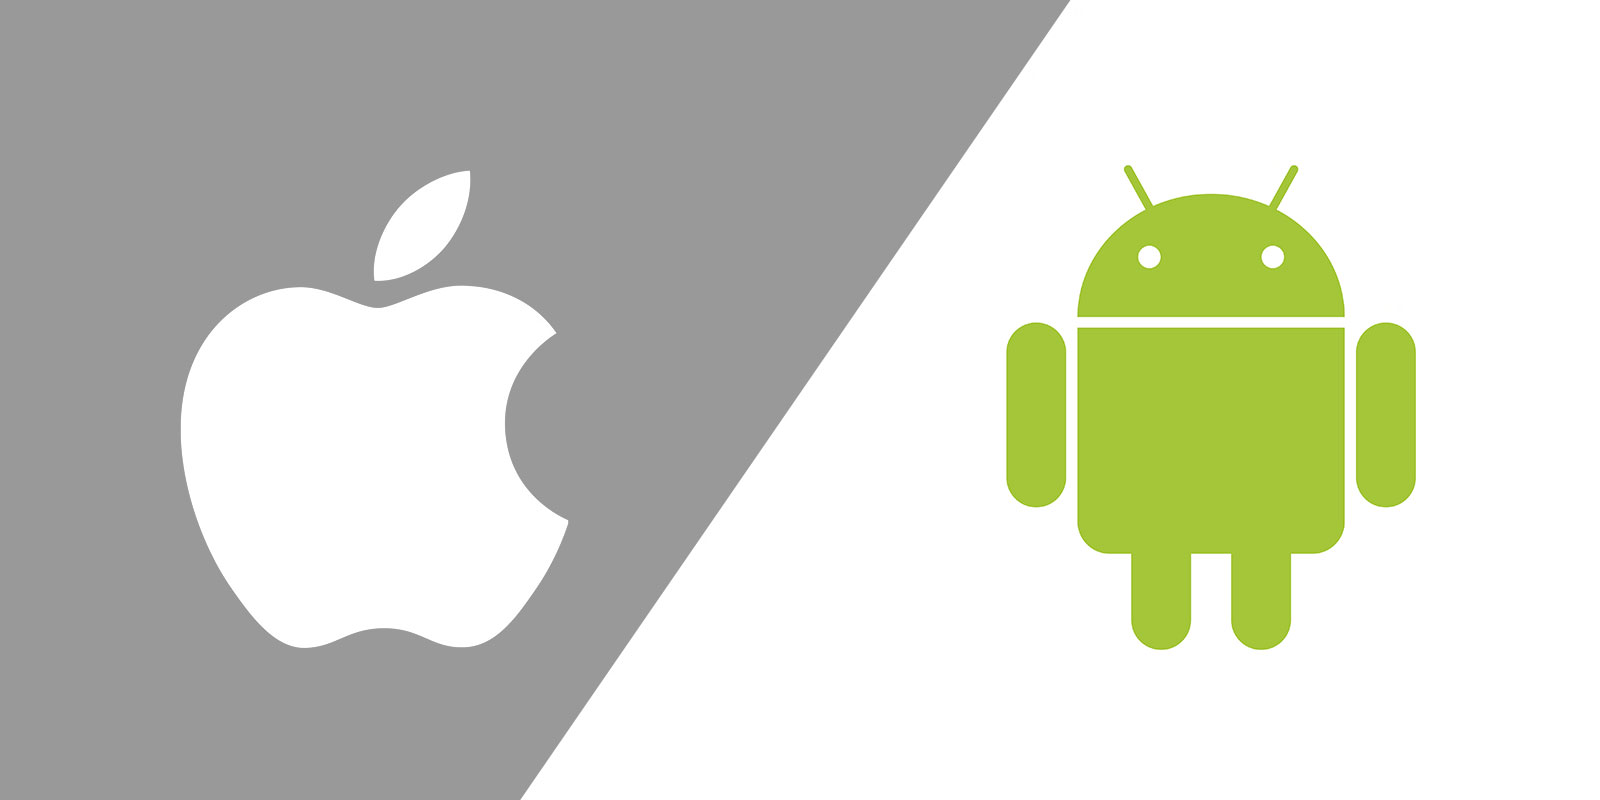 Pengguna Android Lebih Loyal Ketimbang iOS